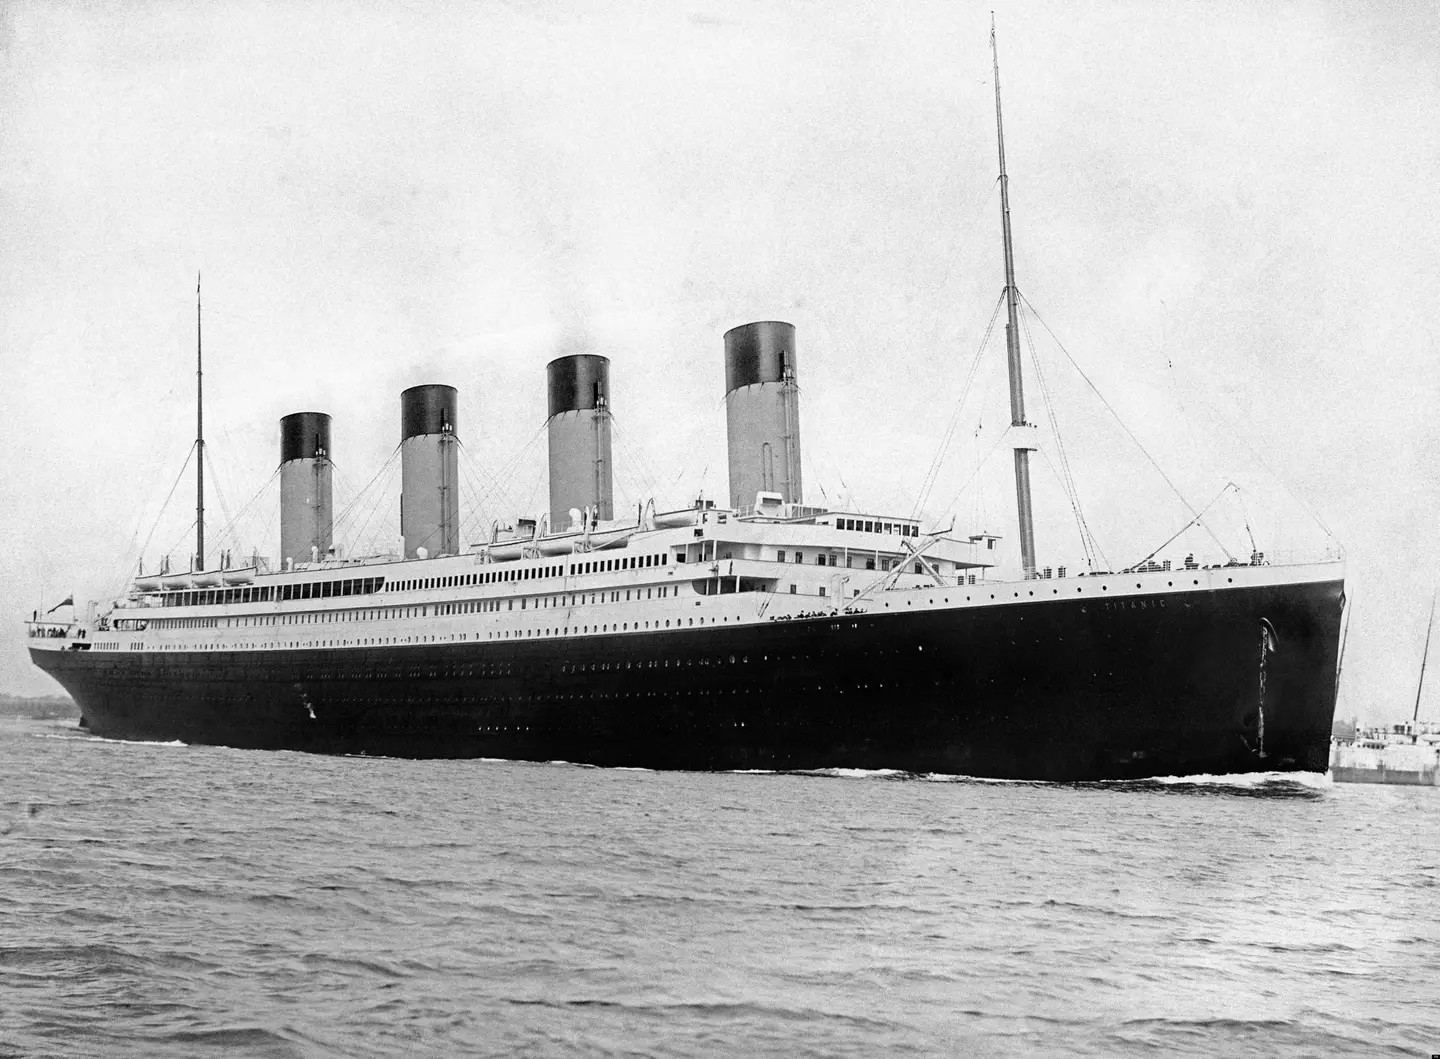 The RMS Titanic sank in April 1912.